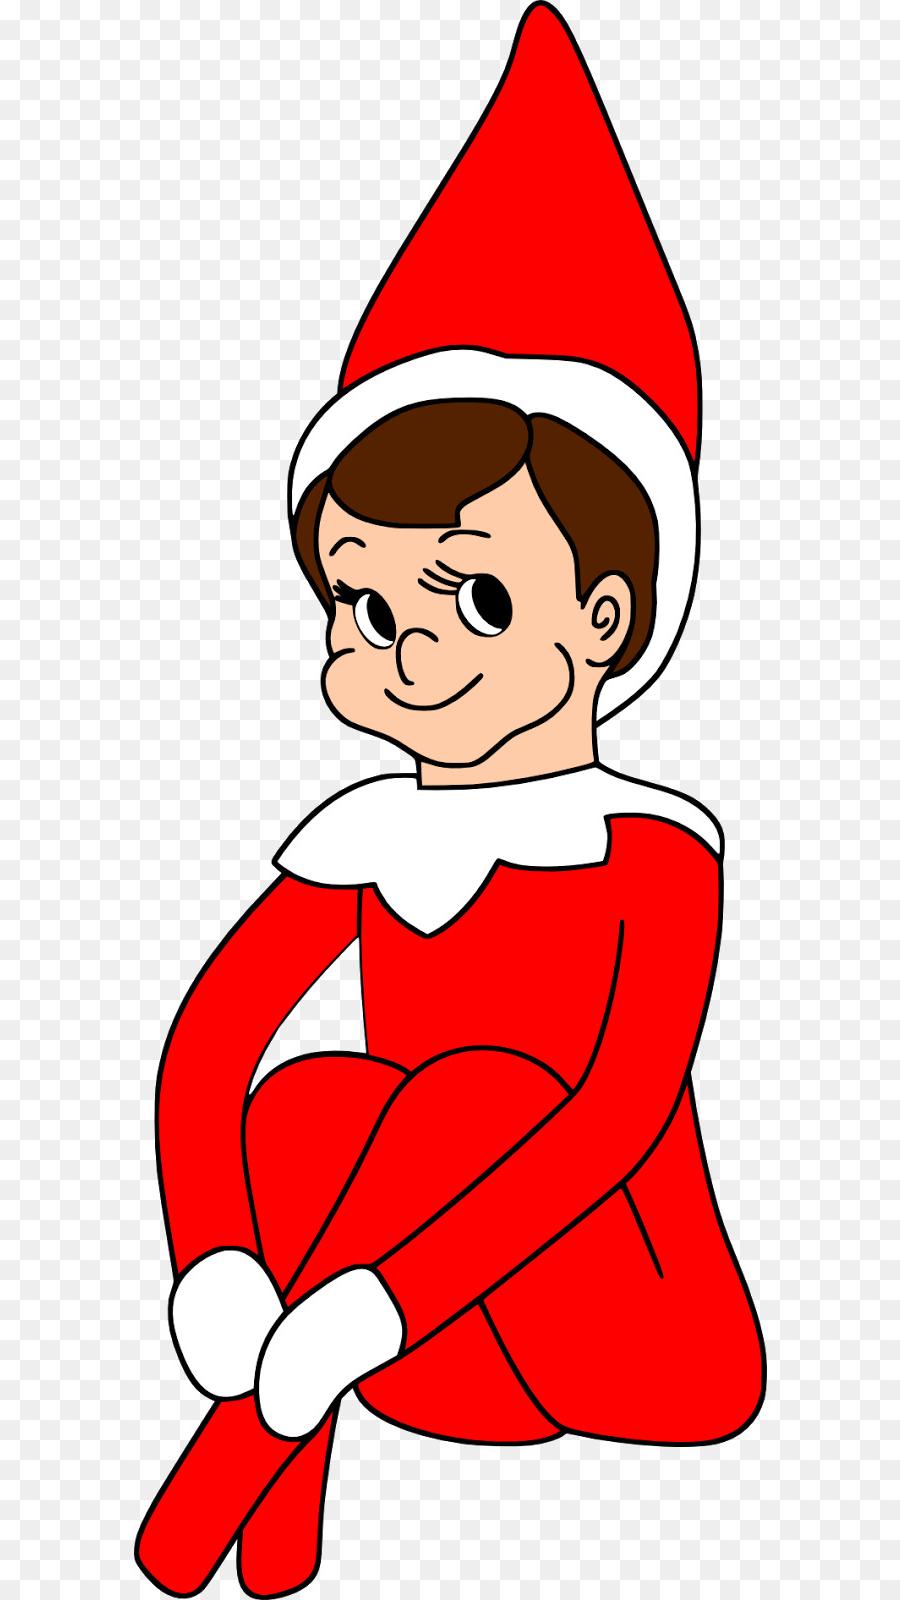 Elf On The Shelf Clipart : Christmas Clipart Elf On The Shelf | Free